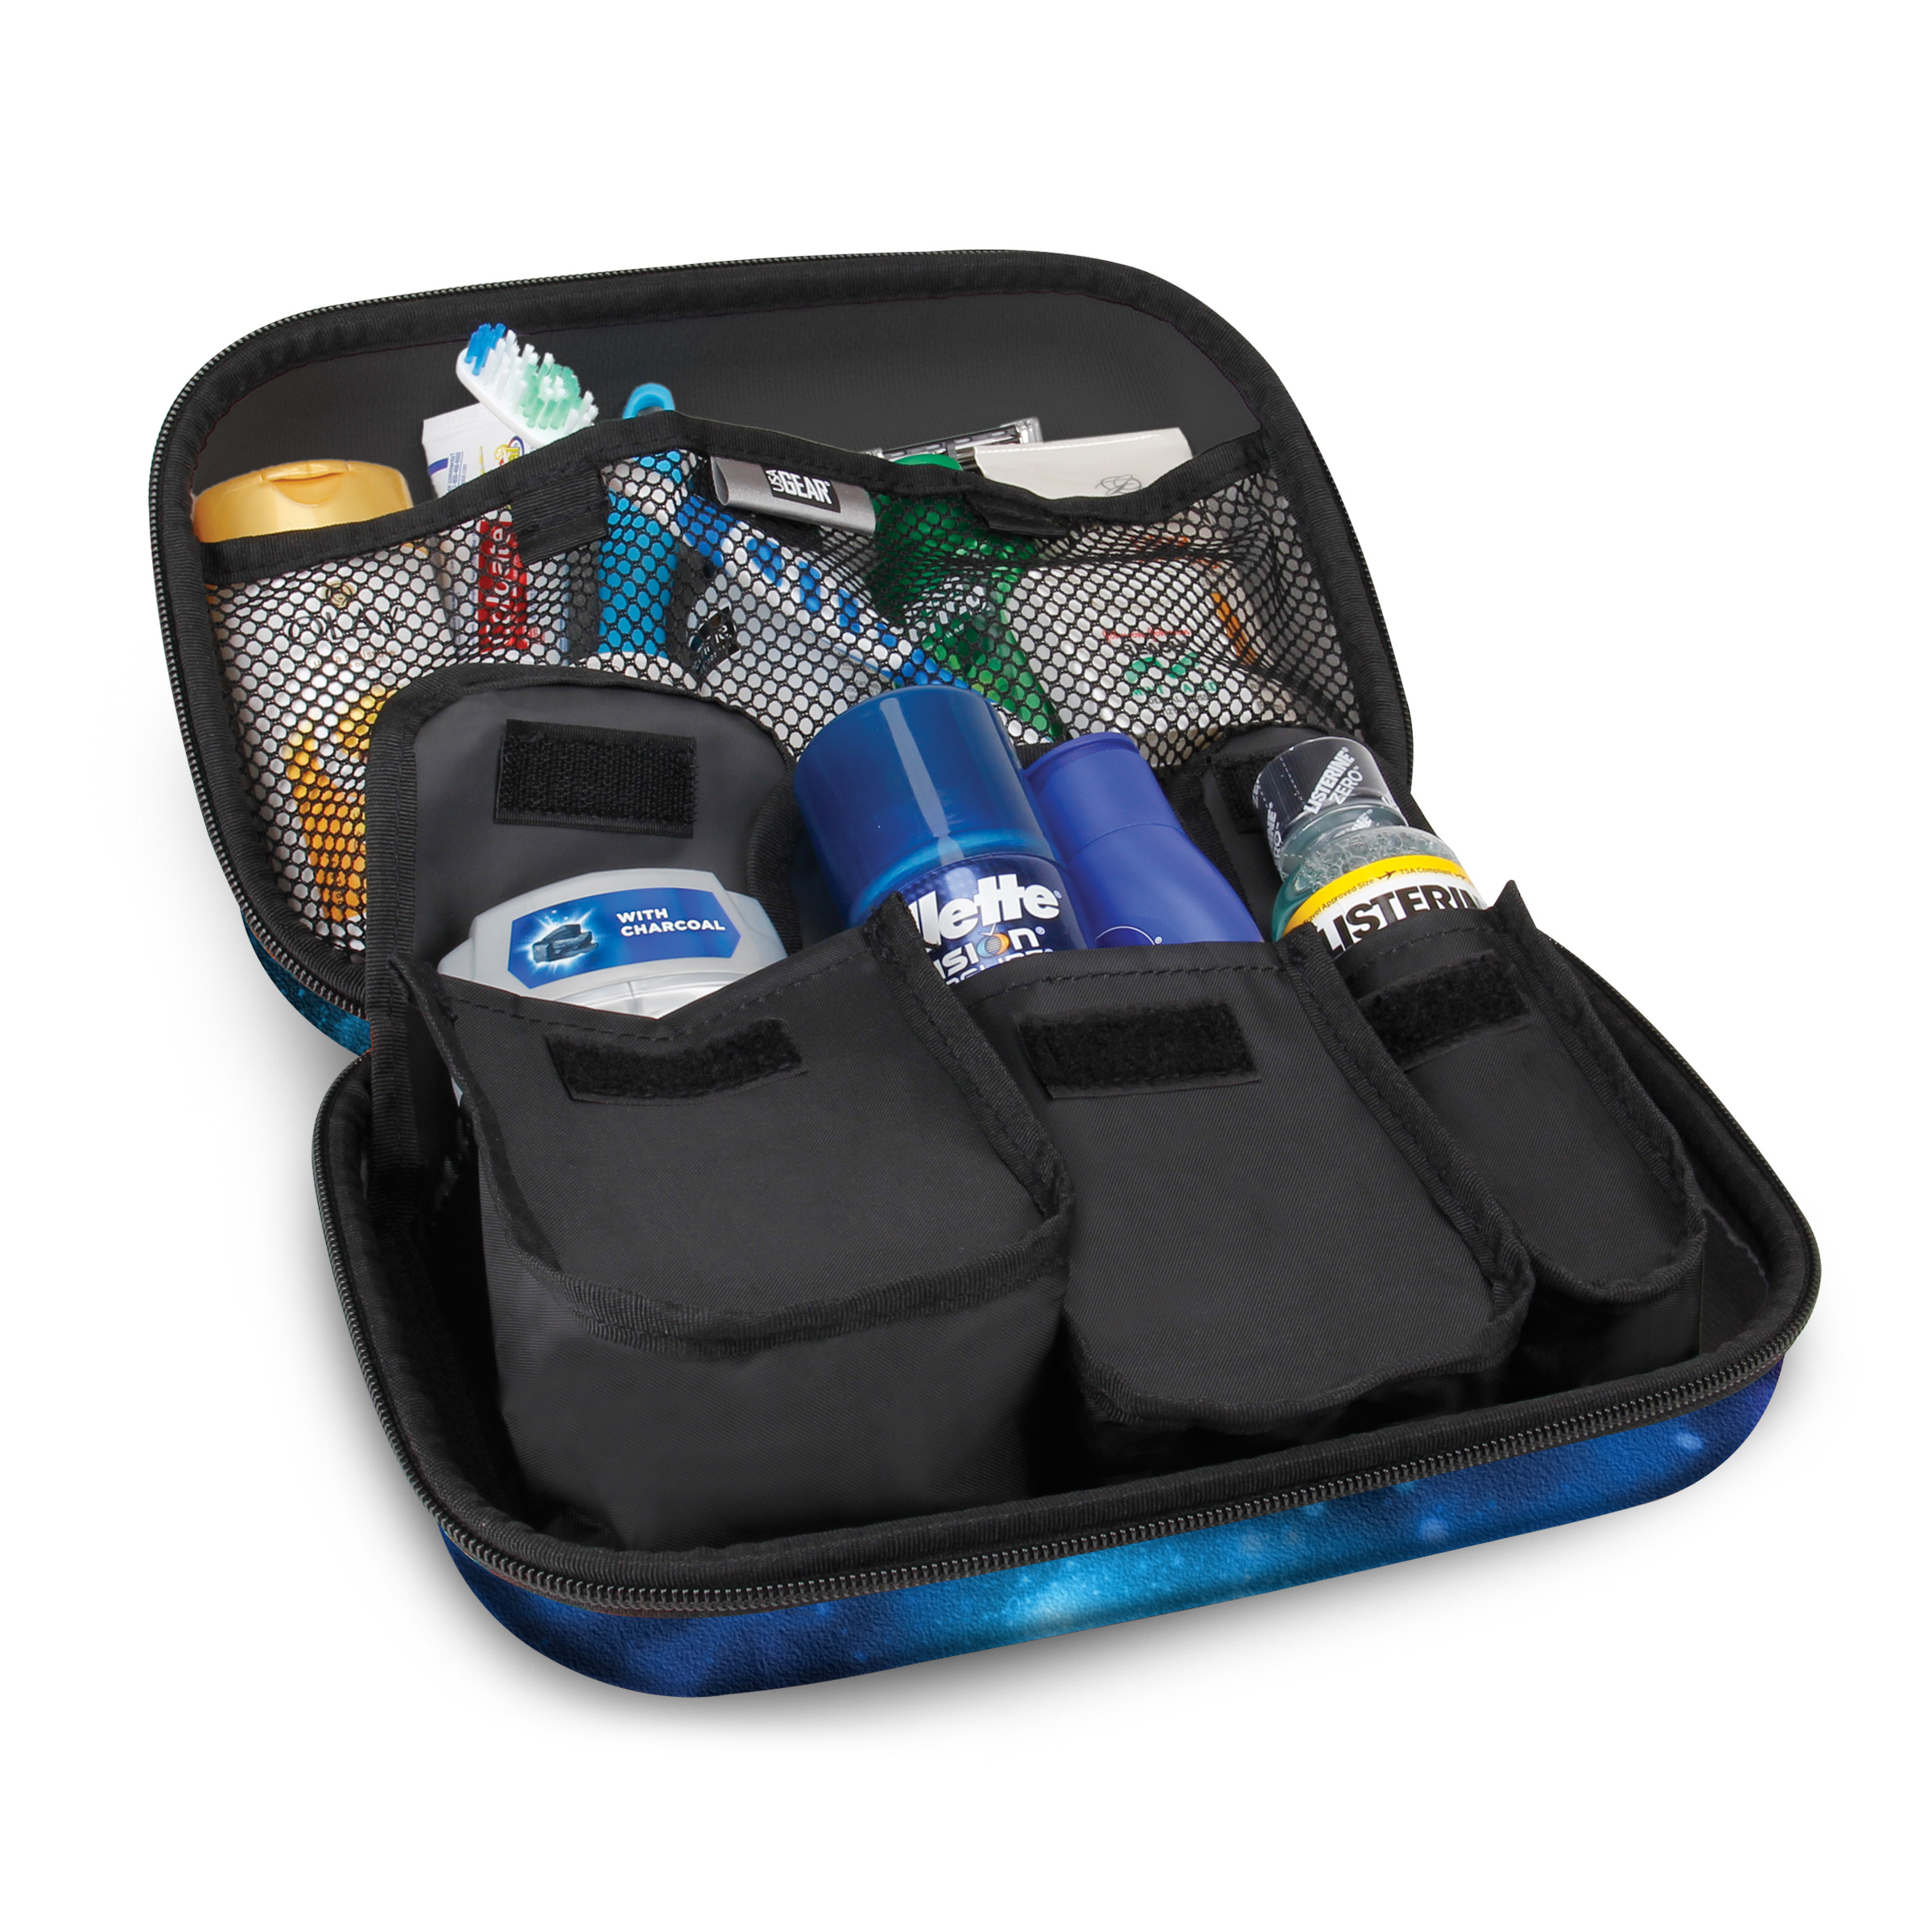 USA GEAR Toiletry Travel Bag Organizer, Customizable Storage Pockets, Nylon Hard Shell - Galaxy - image 2 of 8